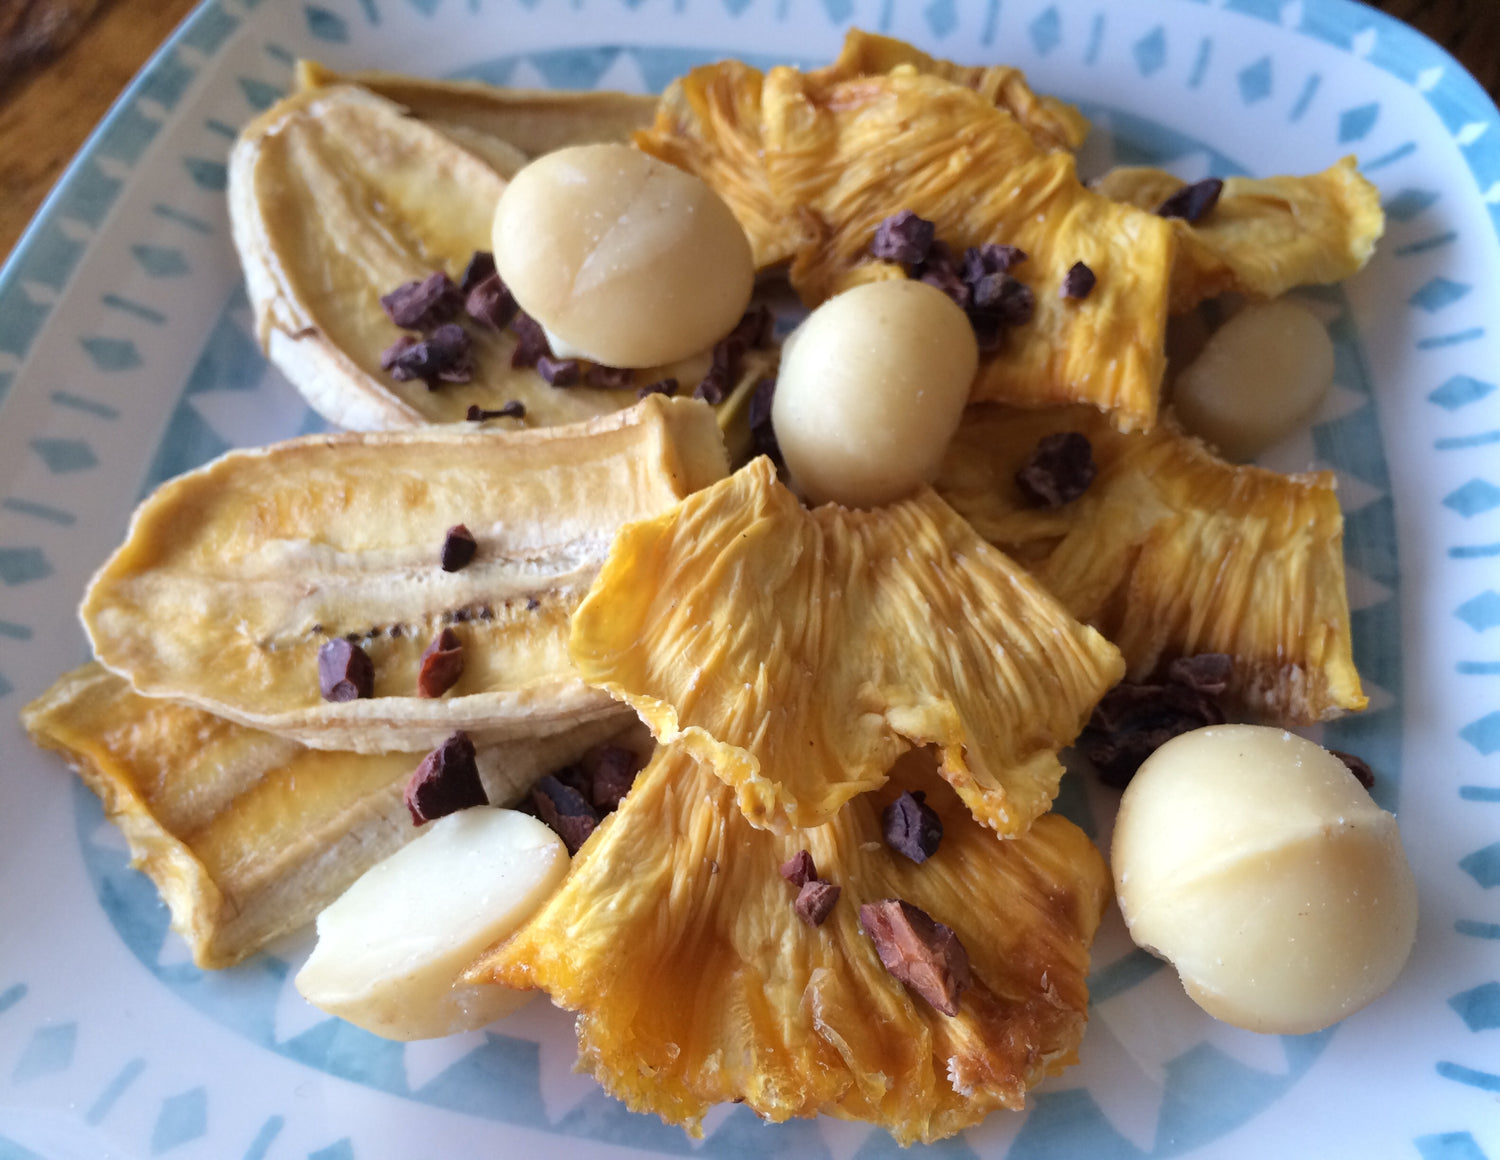 A small plate of dehydrated yellow Hawaiʻian Sweet Gold brand pineapple, apple bananas, cacao nibs, and macadamia nuts.